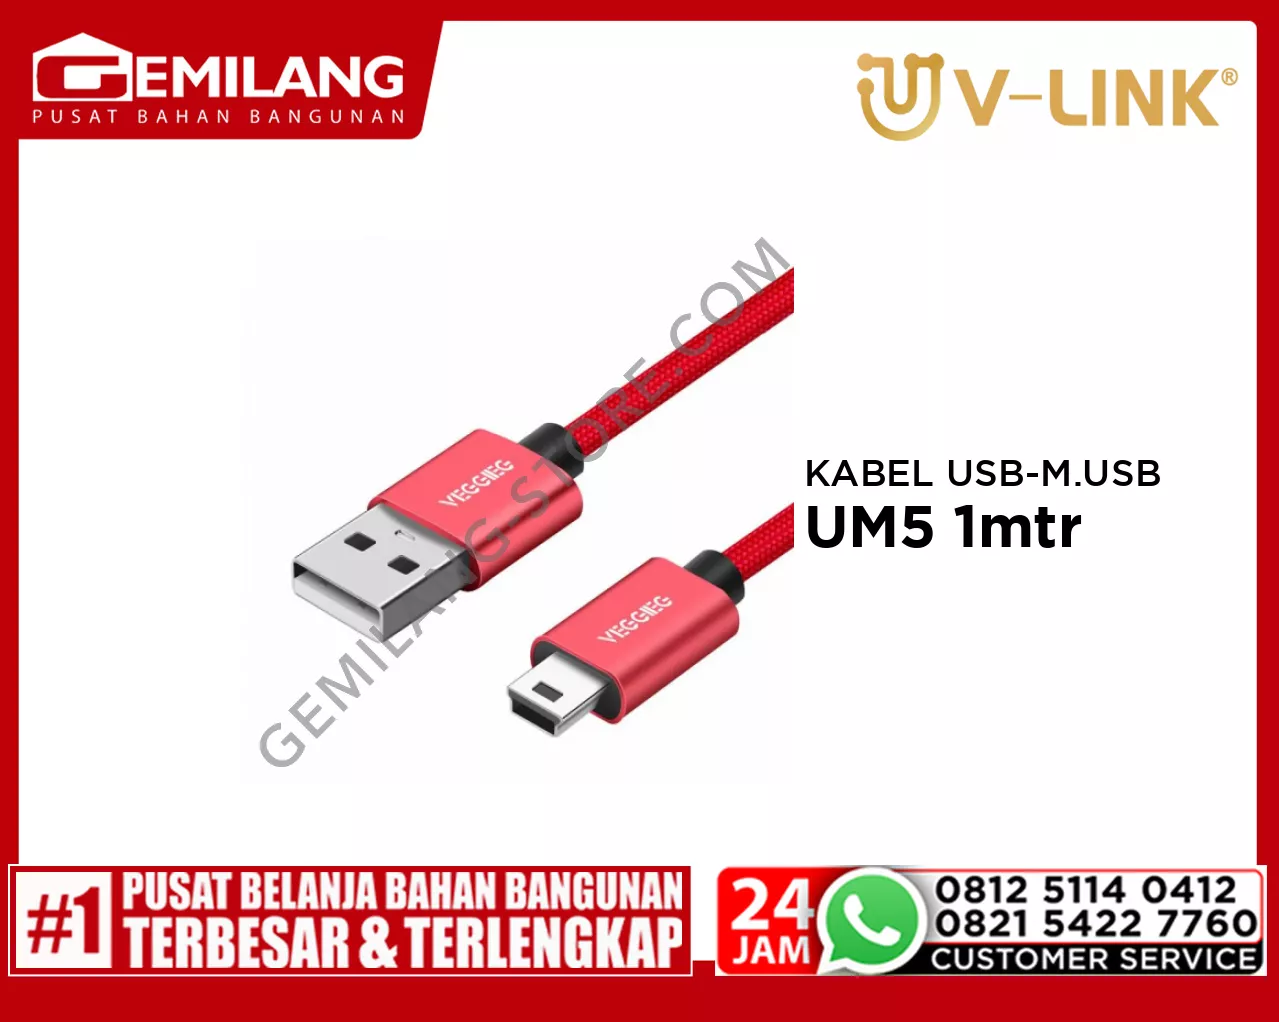 V-LINK KABEL USB TO MINI USB 5 PIN RED VEGGIEG UM5 1mtr